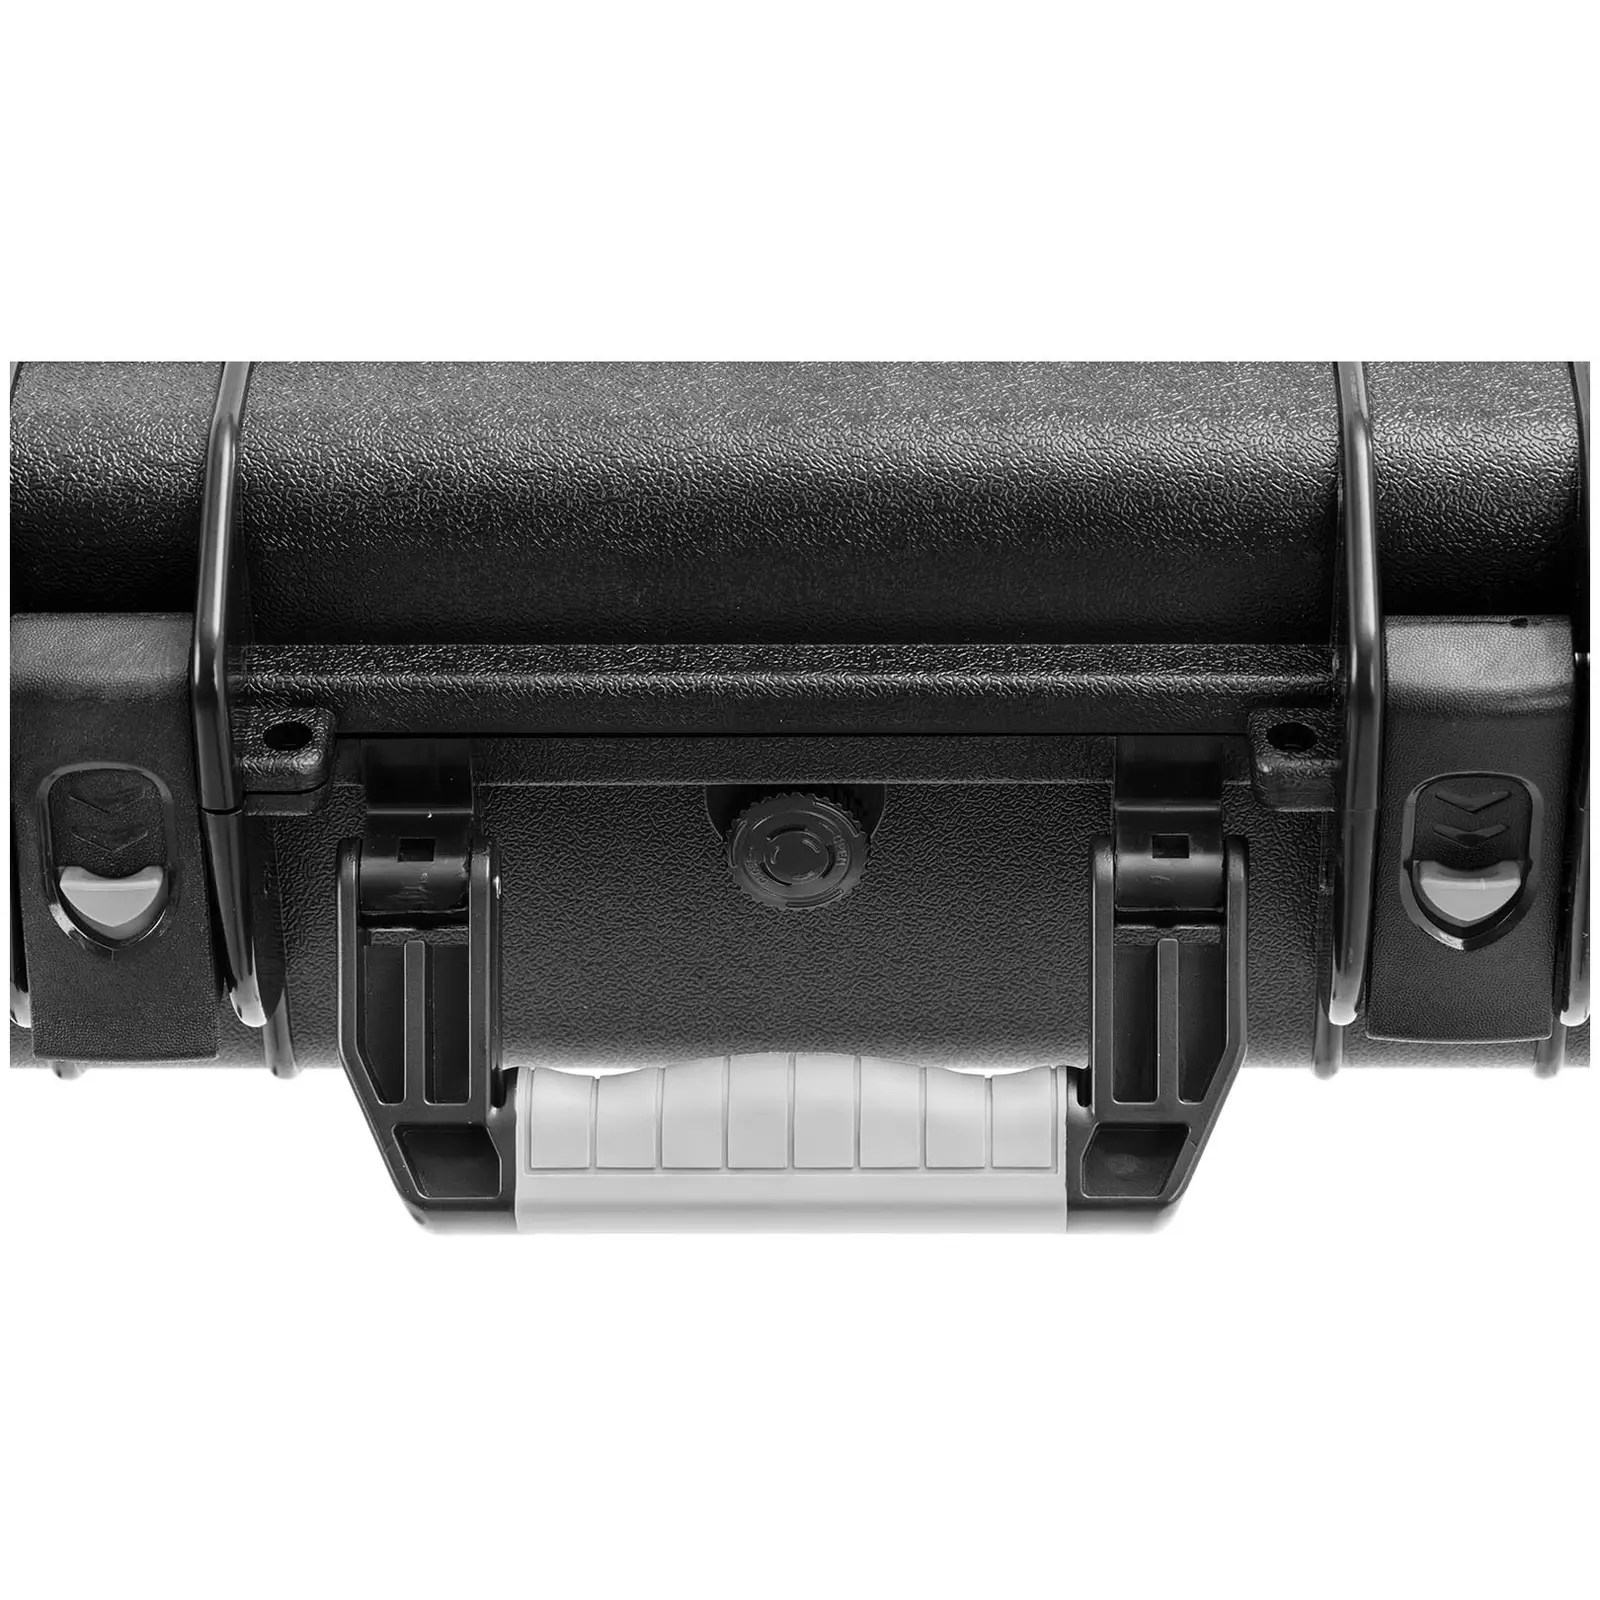 Hard Camera Case - waterproof - 15 l - black - 46.3 x 36.3 x 13.9 cm